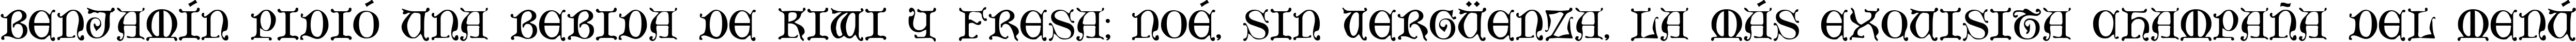 Пример написания шрифтом Aneirin текста на испанском